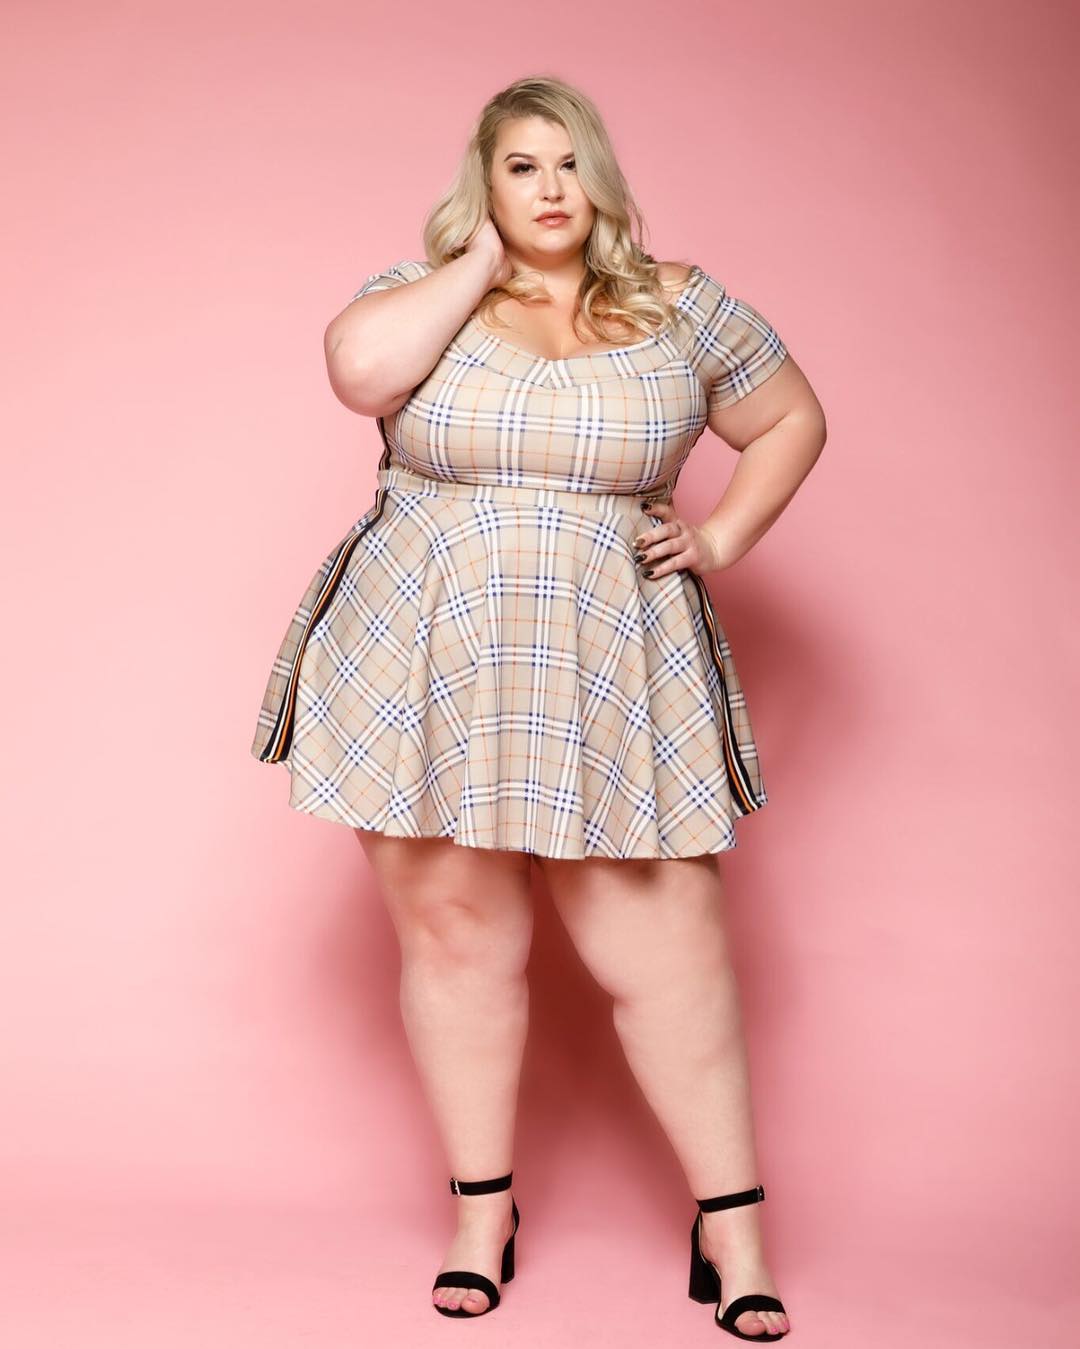 Plus Size Model Lyndsay Patricia (aka PlusSizeBarbiiee) - The Curvy List